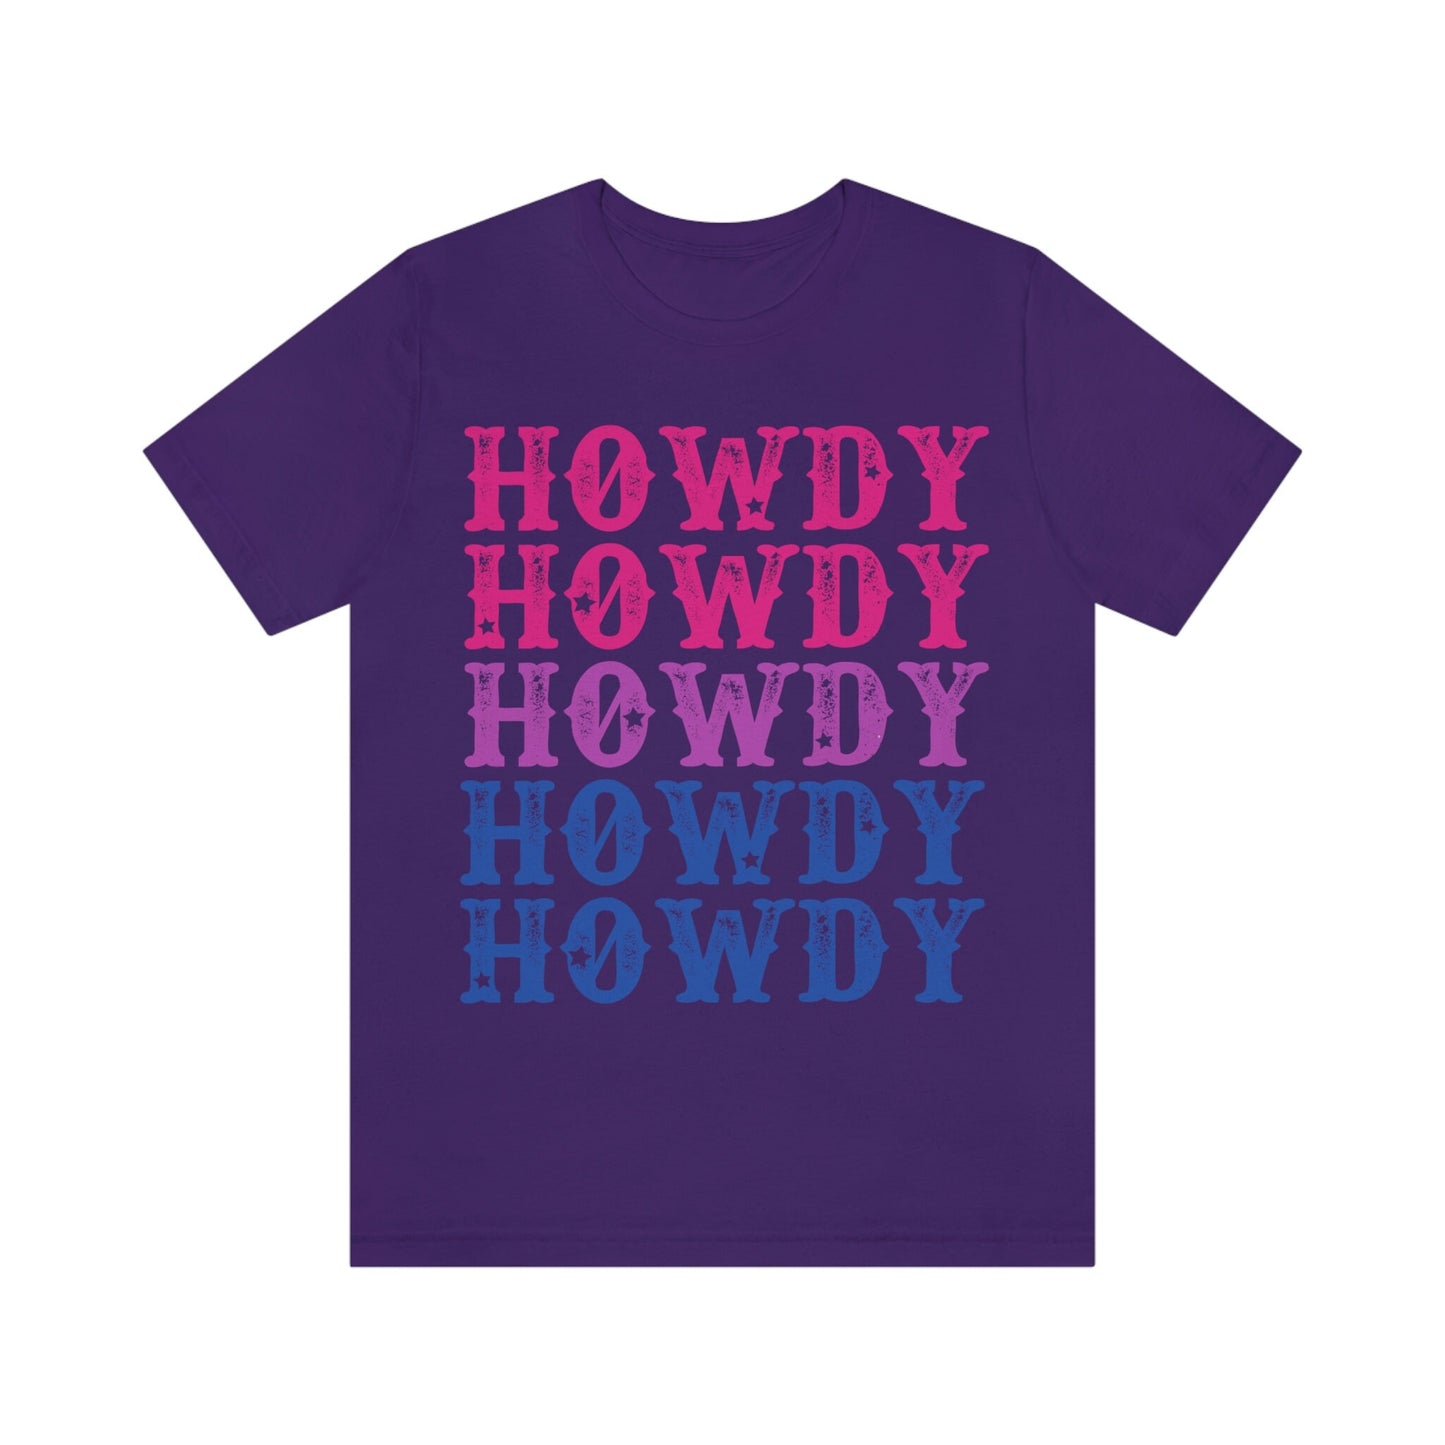 Howdy bisexuals shirt